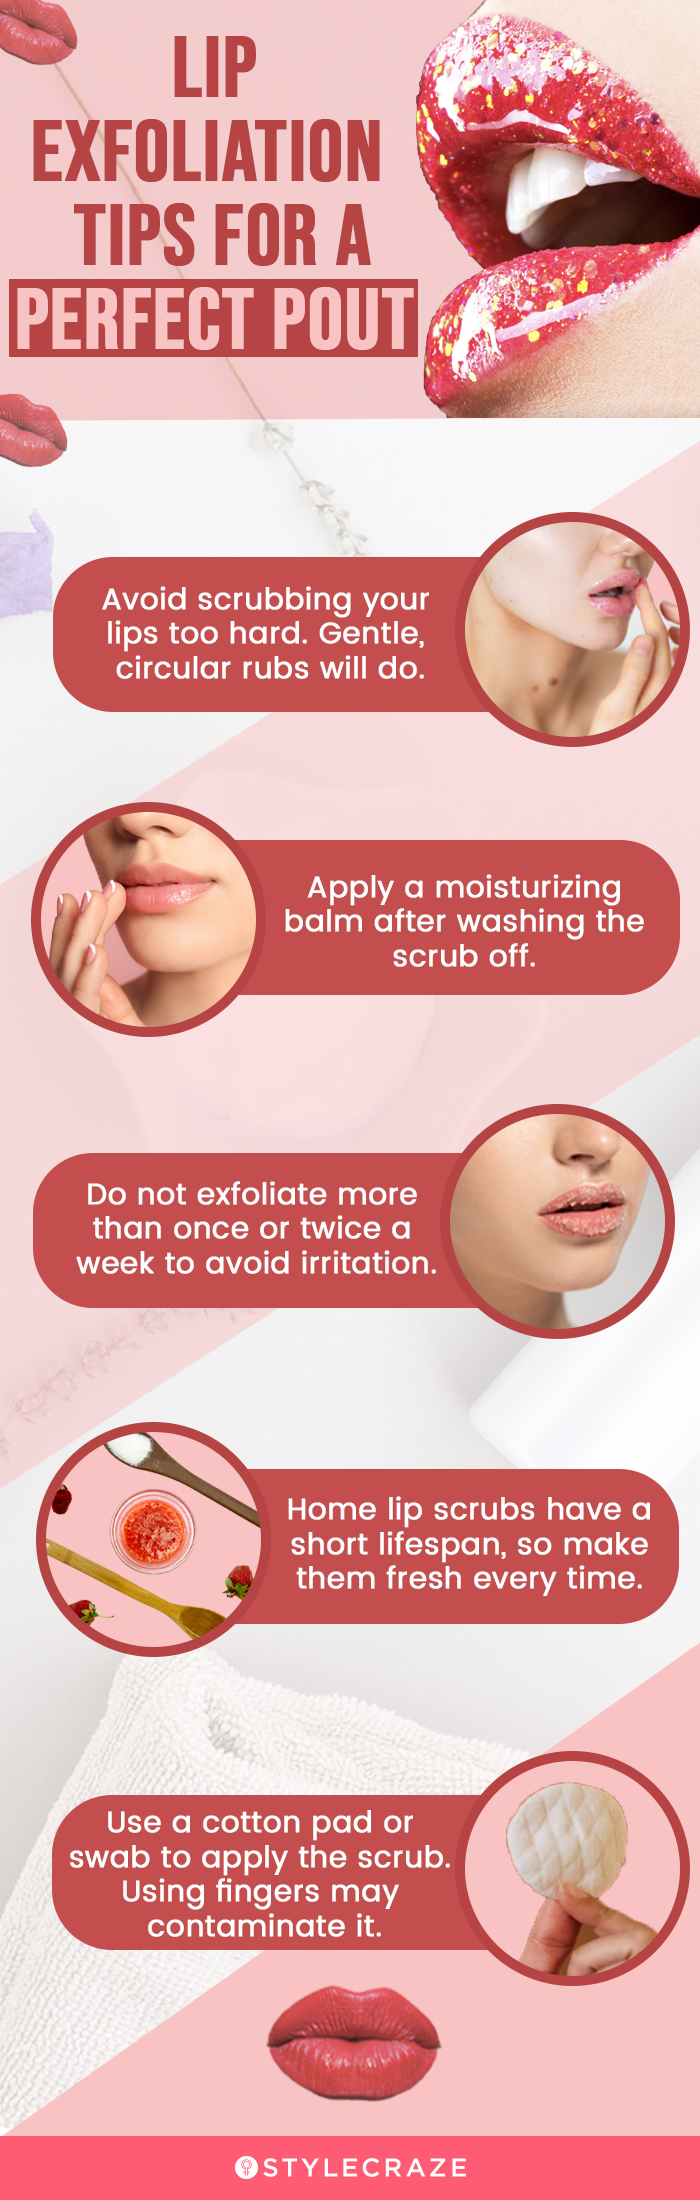 lips exfoliation [infographic]